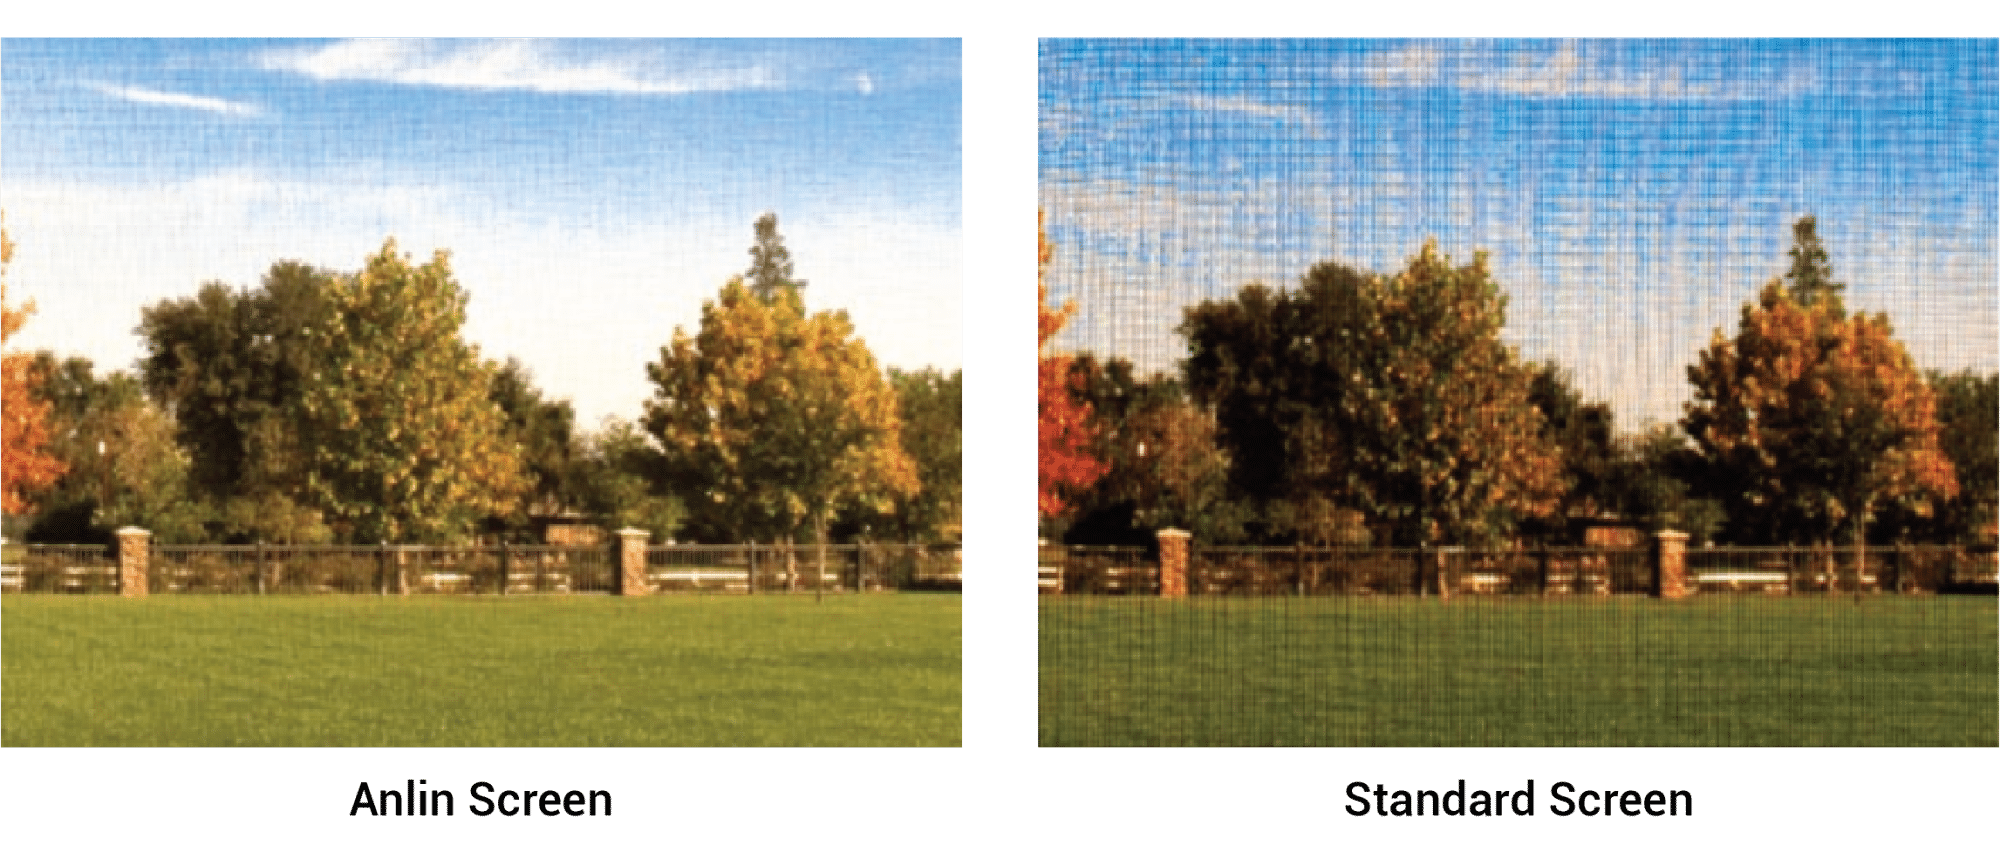 Anlin Screen vs Standard Screen